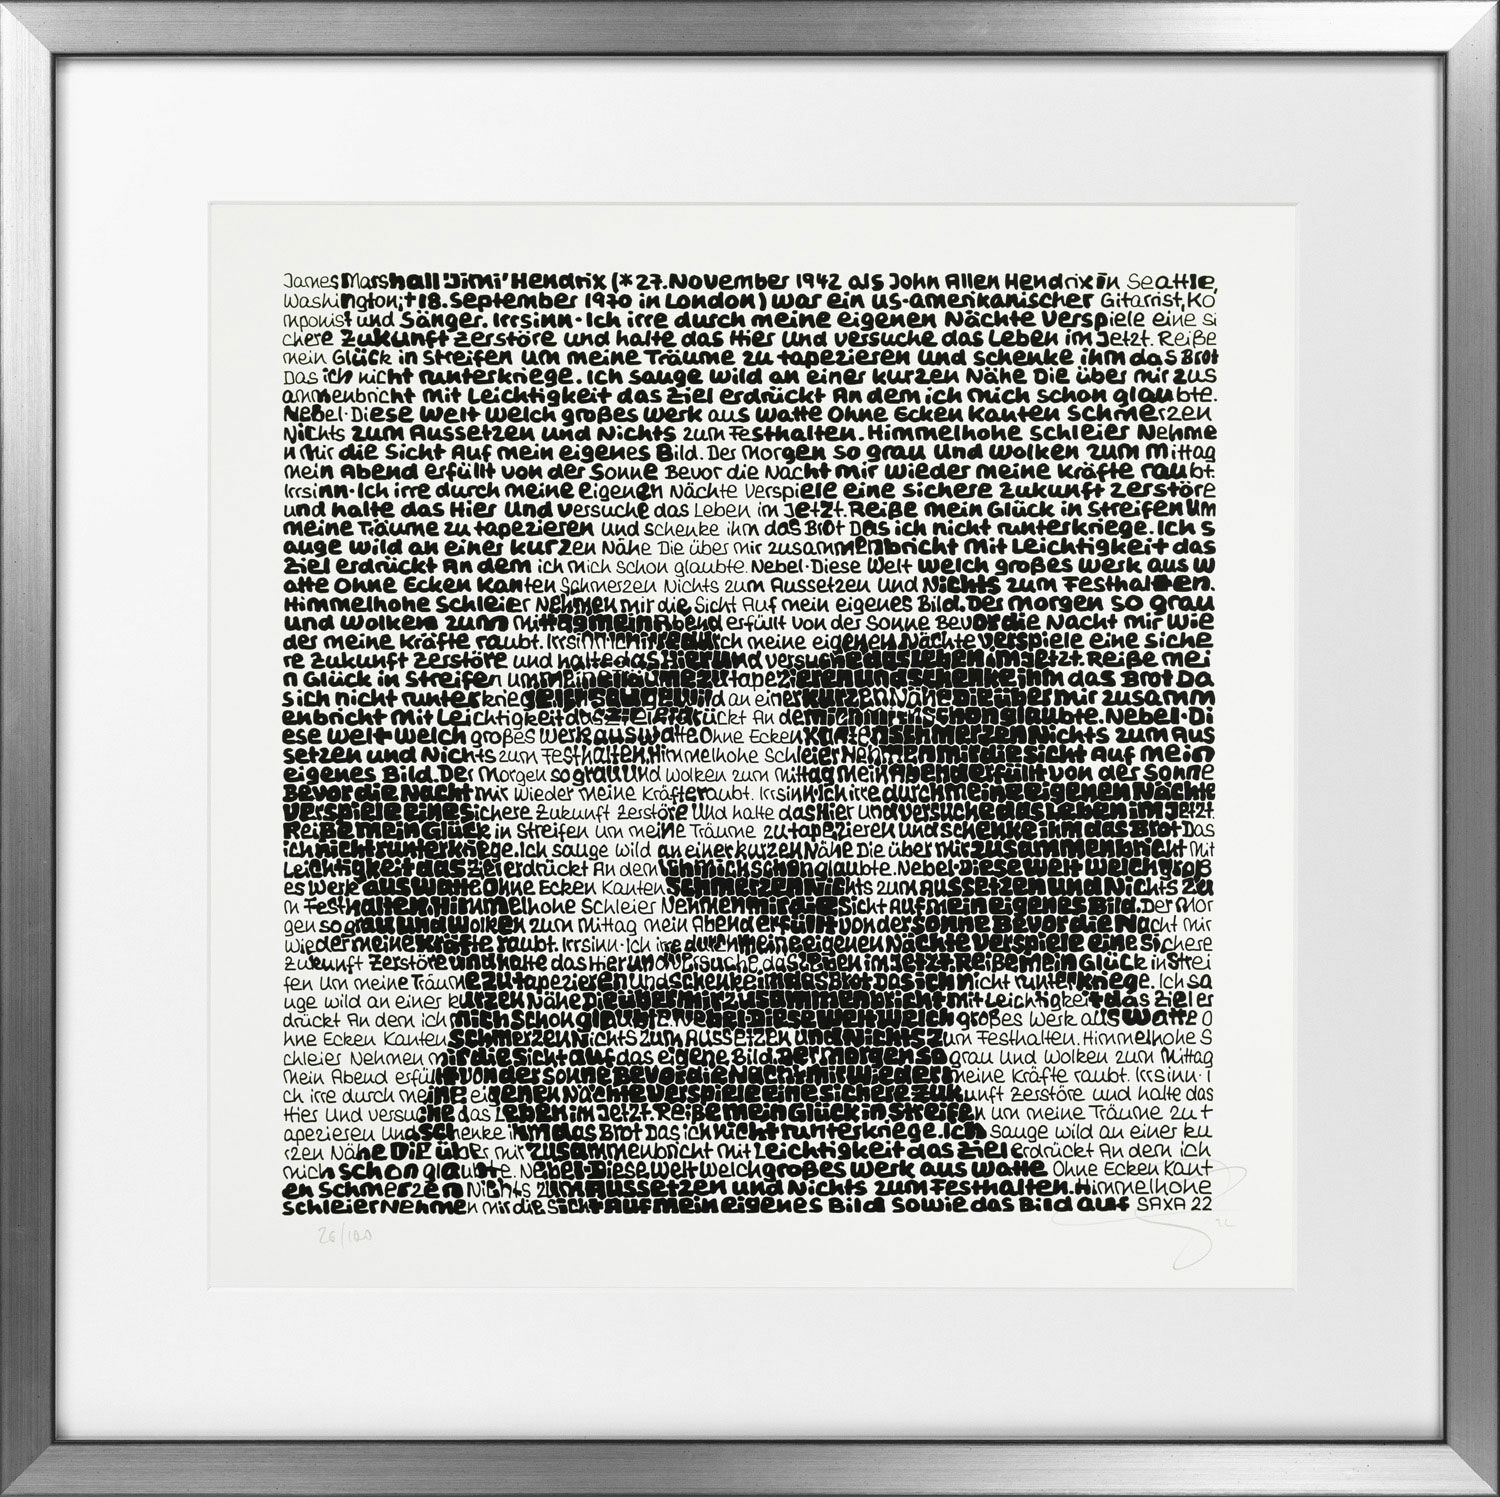 Tableau "Jimi Hendrix" (2022), encadré von SAXA